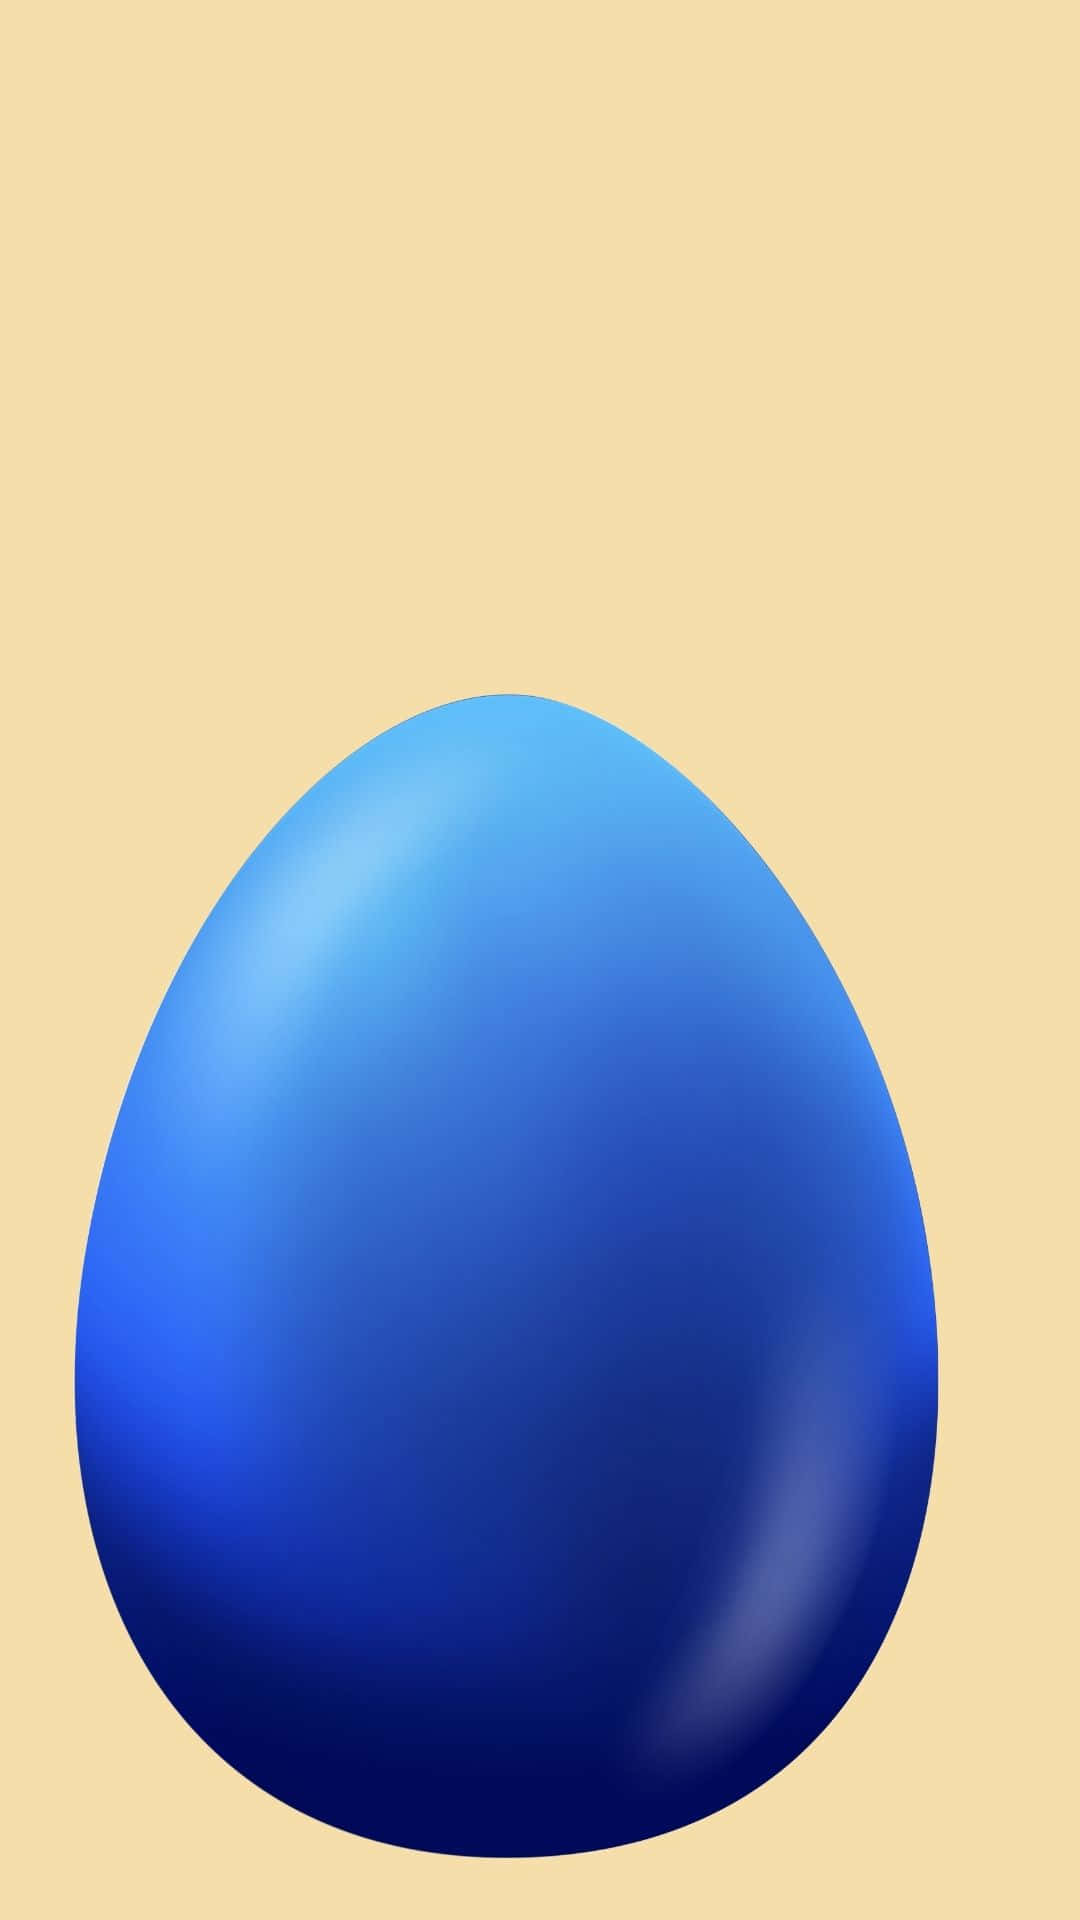 A Blue Ball On A Beige Background Wallpaper